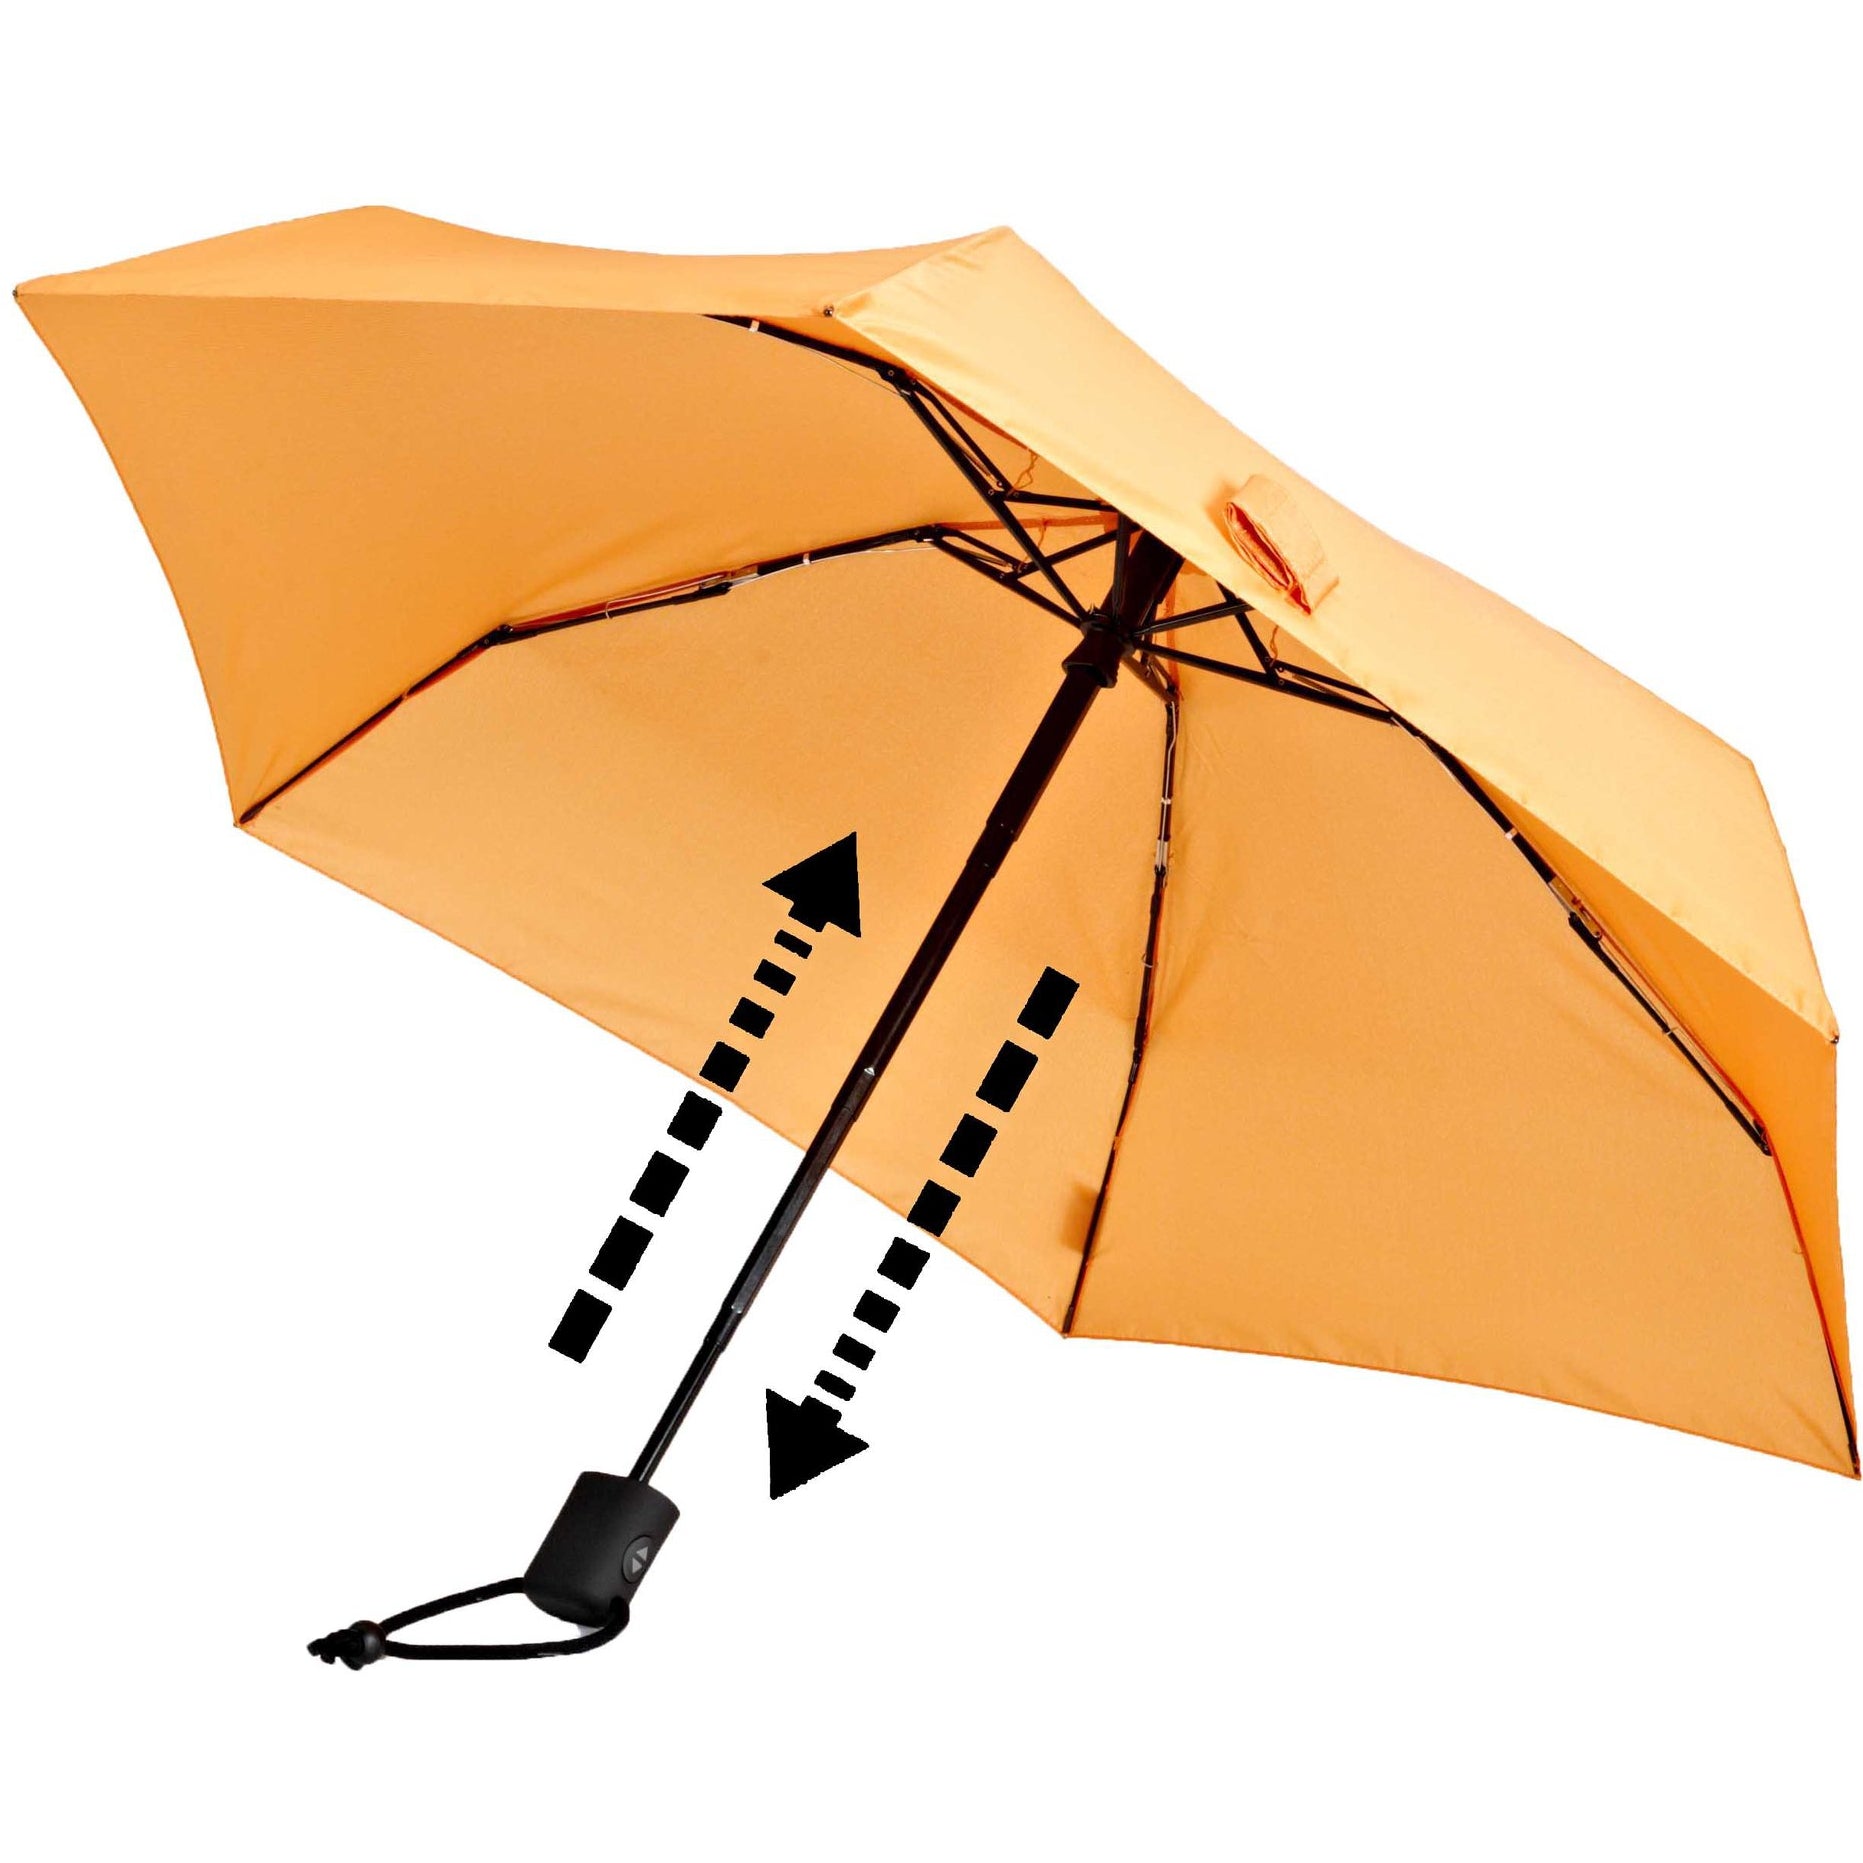 Skoda Automatik Regenschirm Stockschirm Umbrella Simply Clever